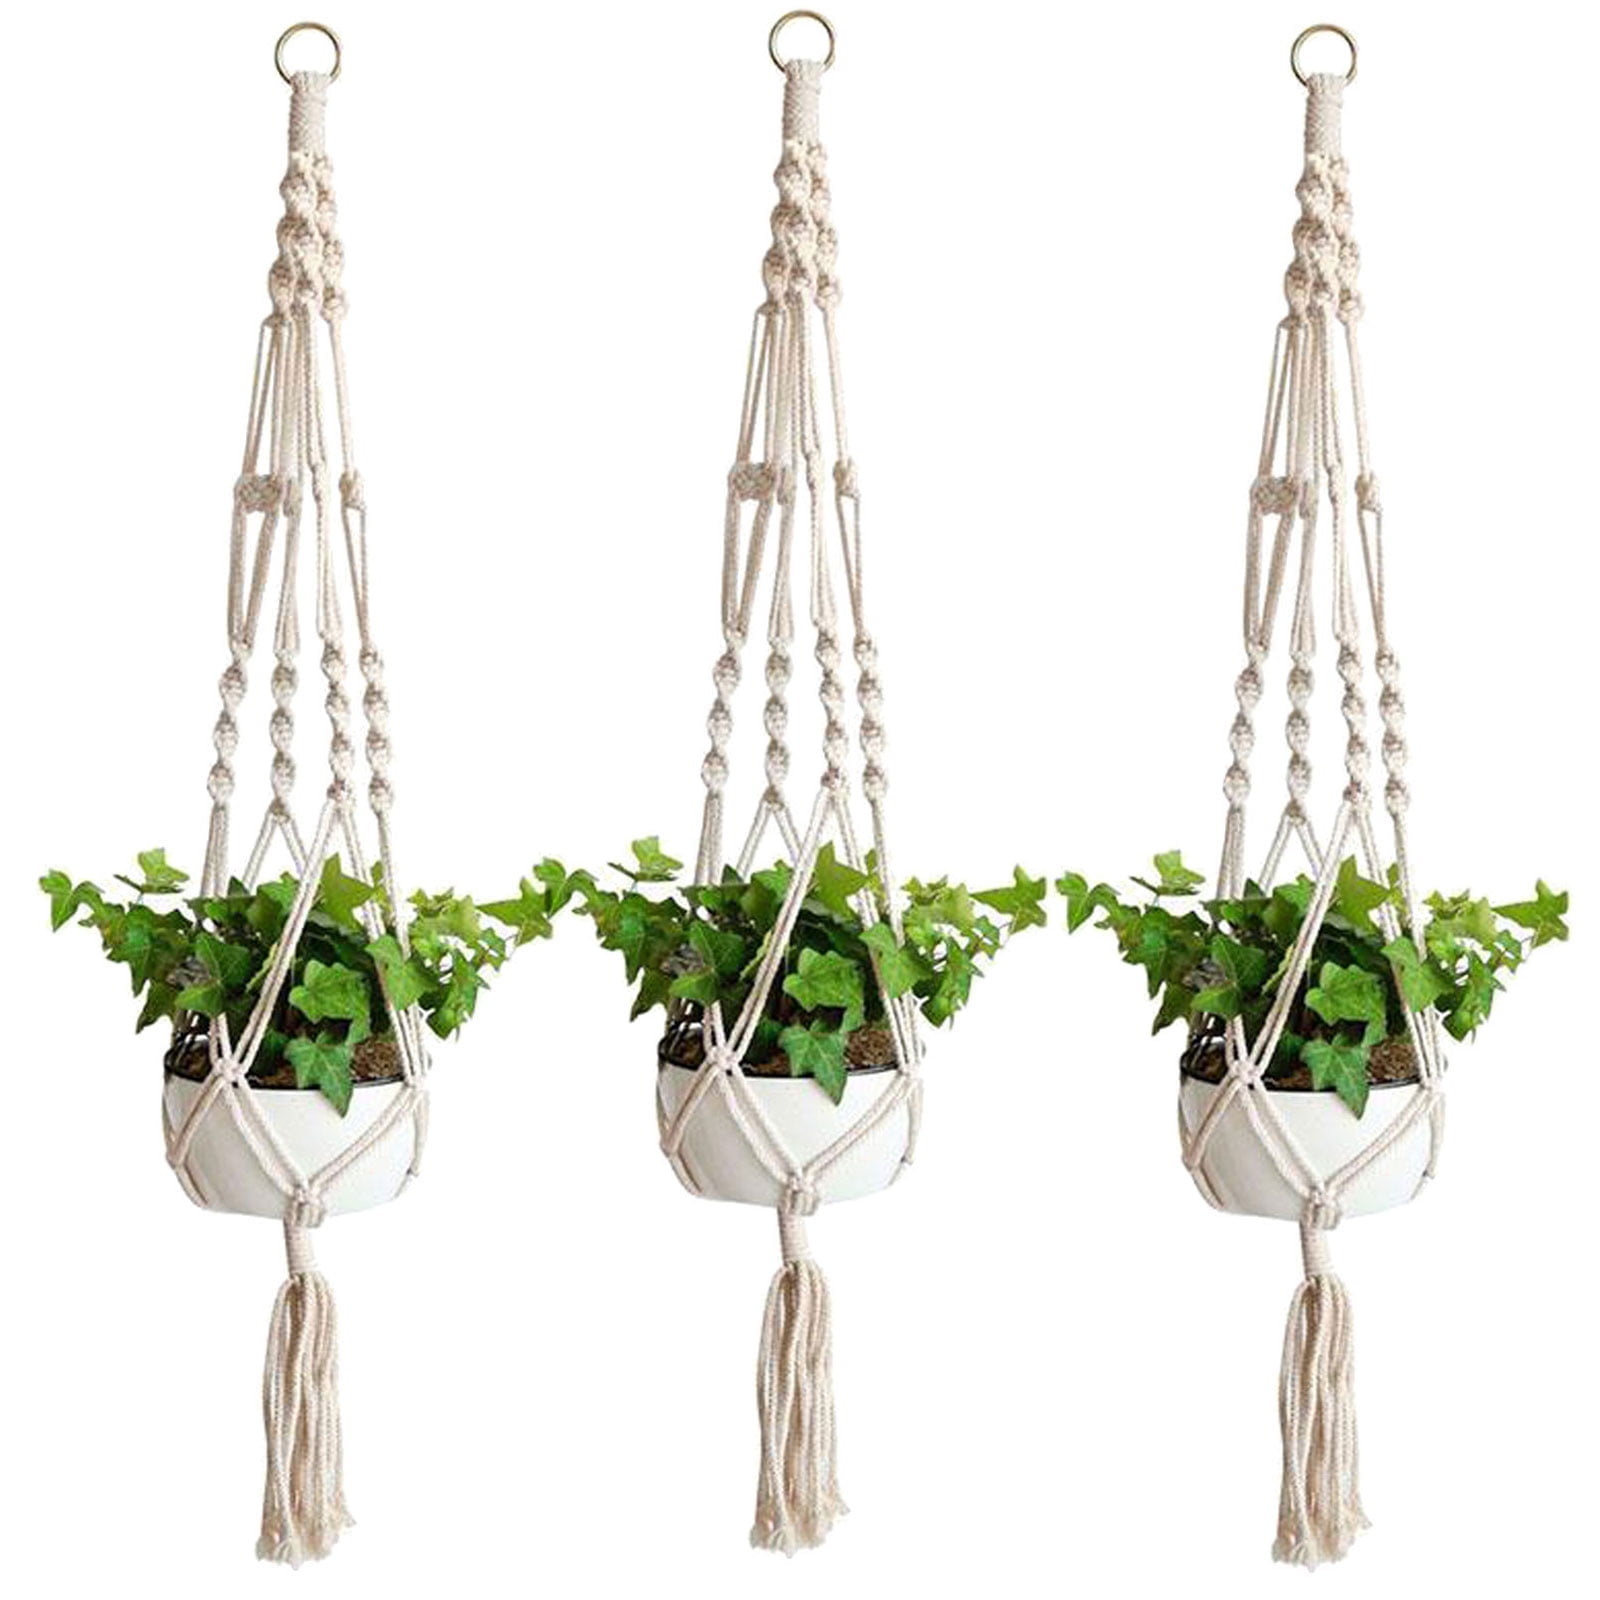 EEEkit 3pcs Macrame Plant Hangers, Hanging Planter Baskets, Decorative Flower Pot Holders for Indoor Outdoor Boho Home Decor, 41"